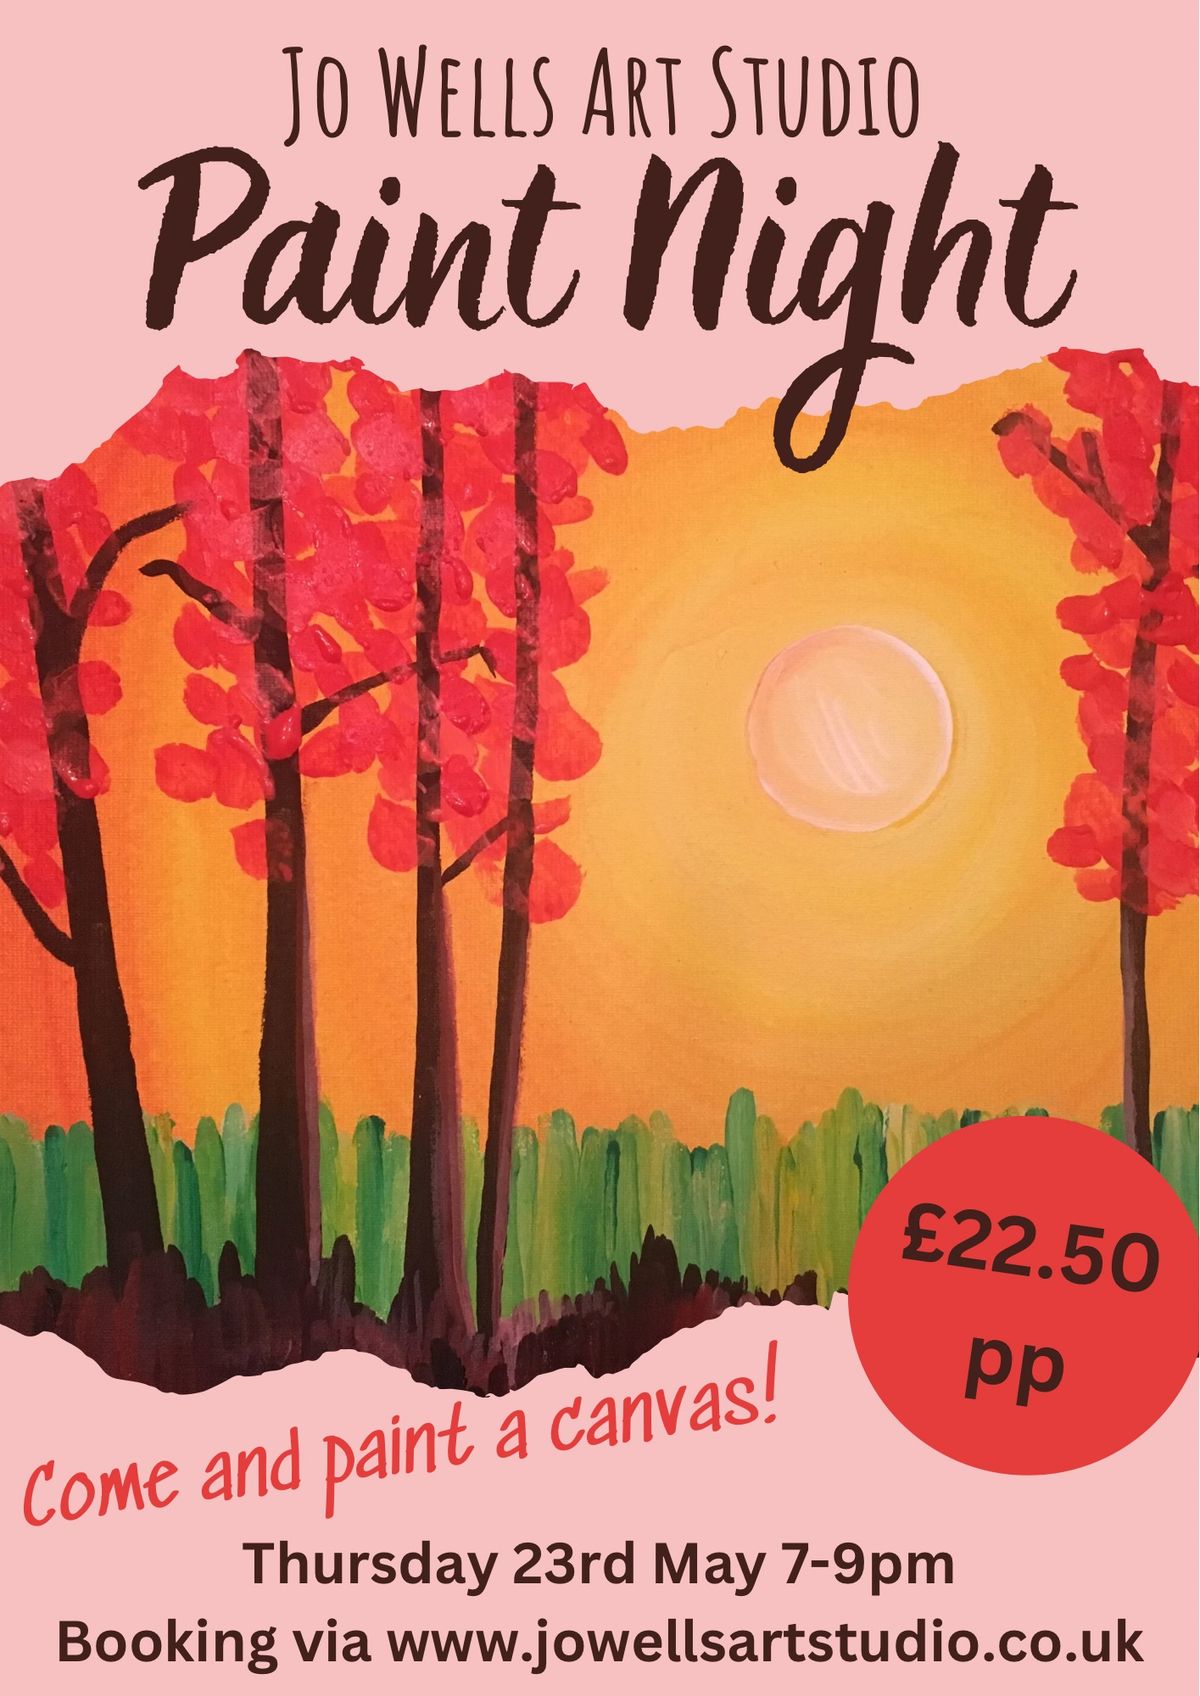 Paint night- paint a canvas